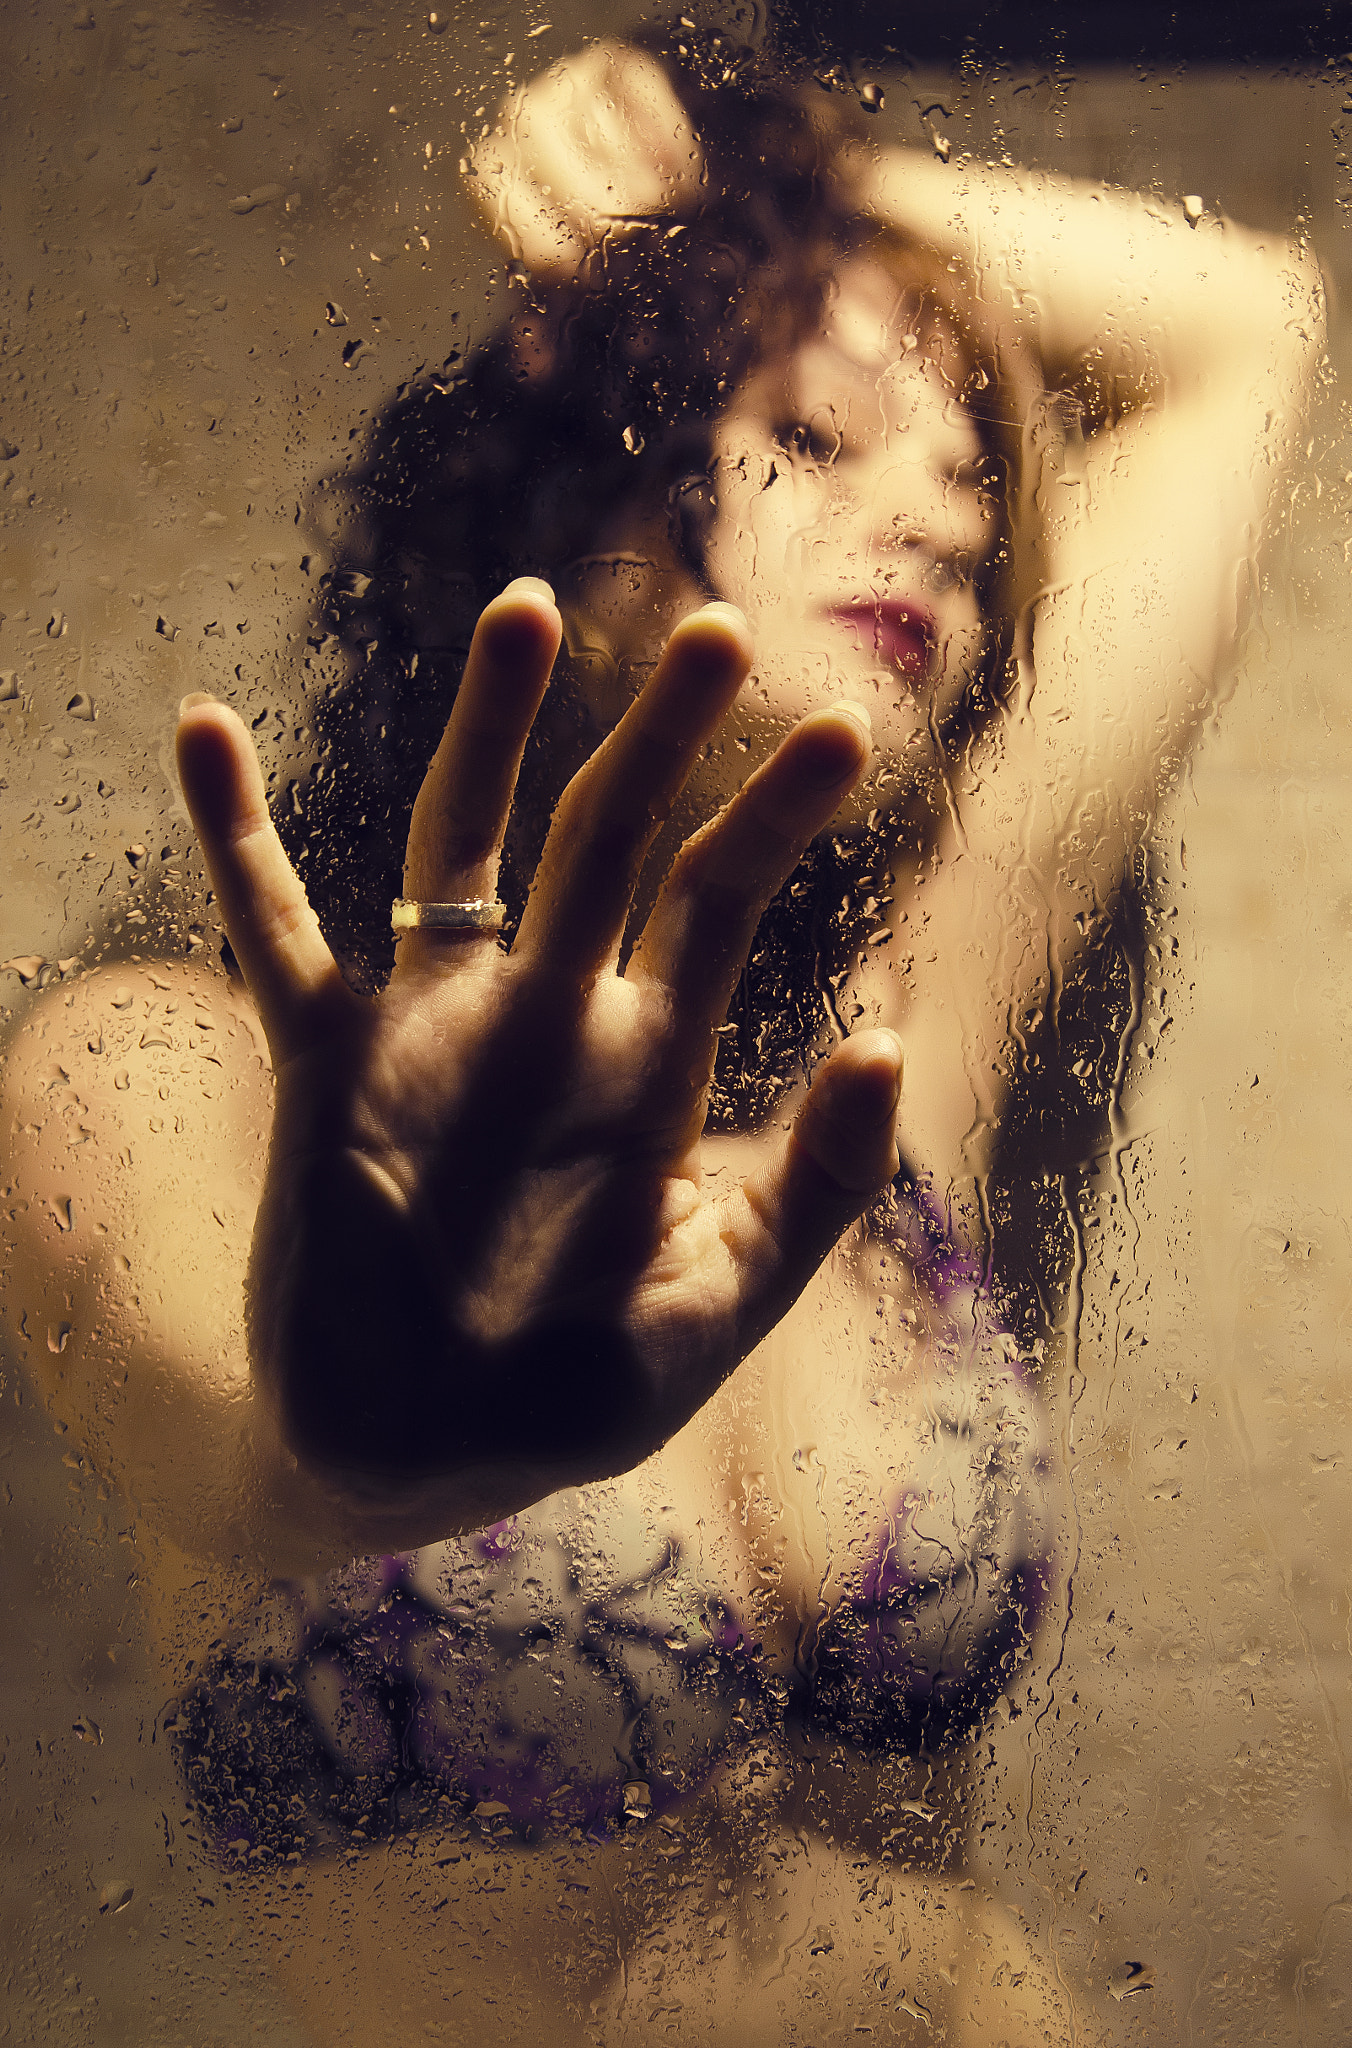 Woman behind glass bathroom stall with hands forward, sensual feeling